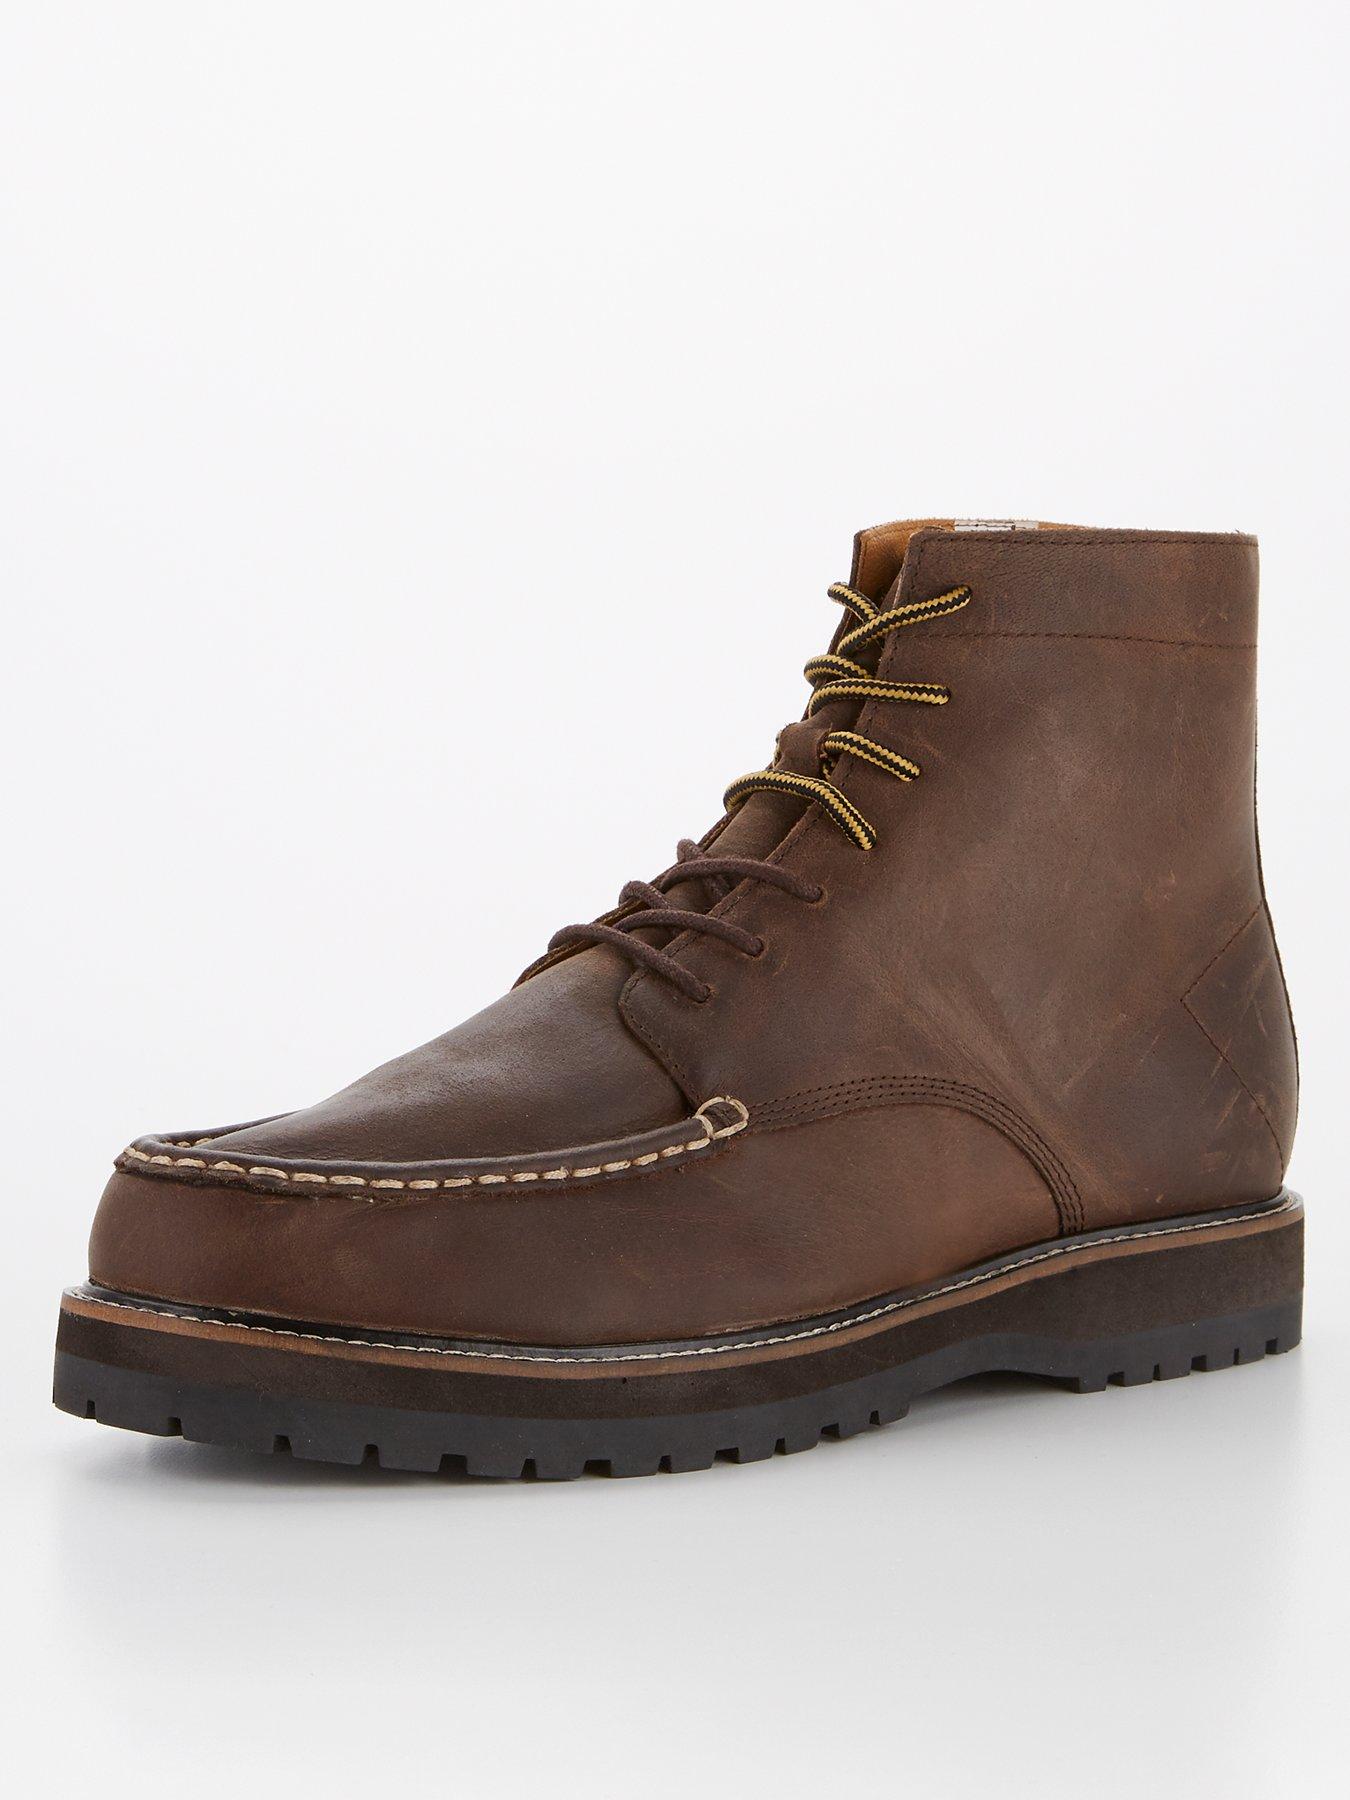 Shoes & boots Vintage Detroit Boots - Chocolate Brown